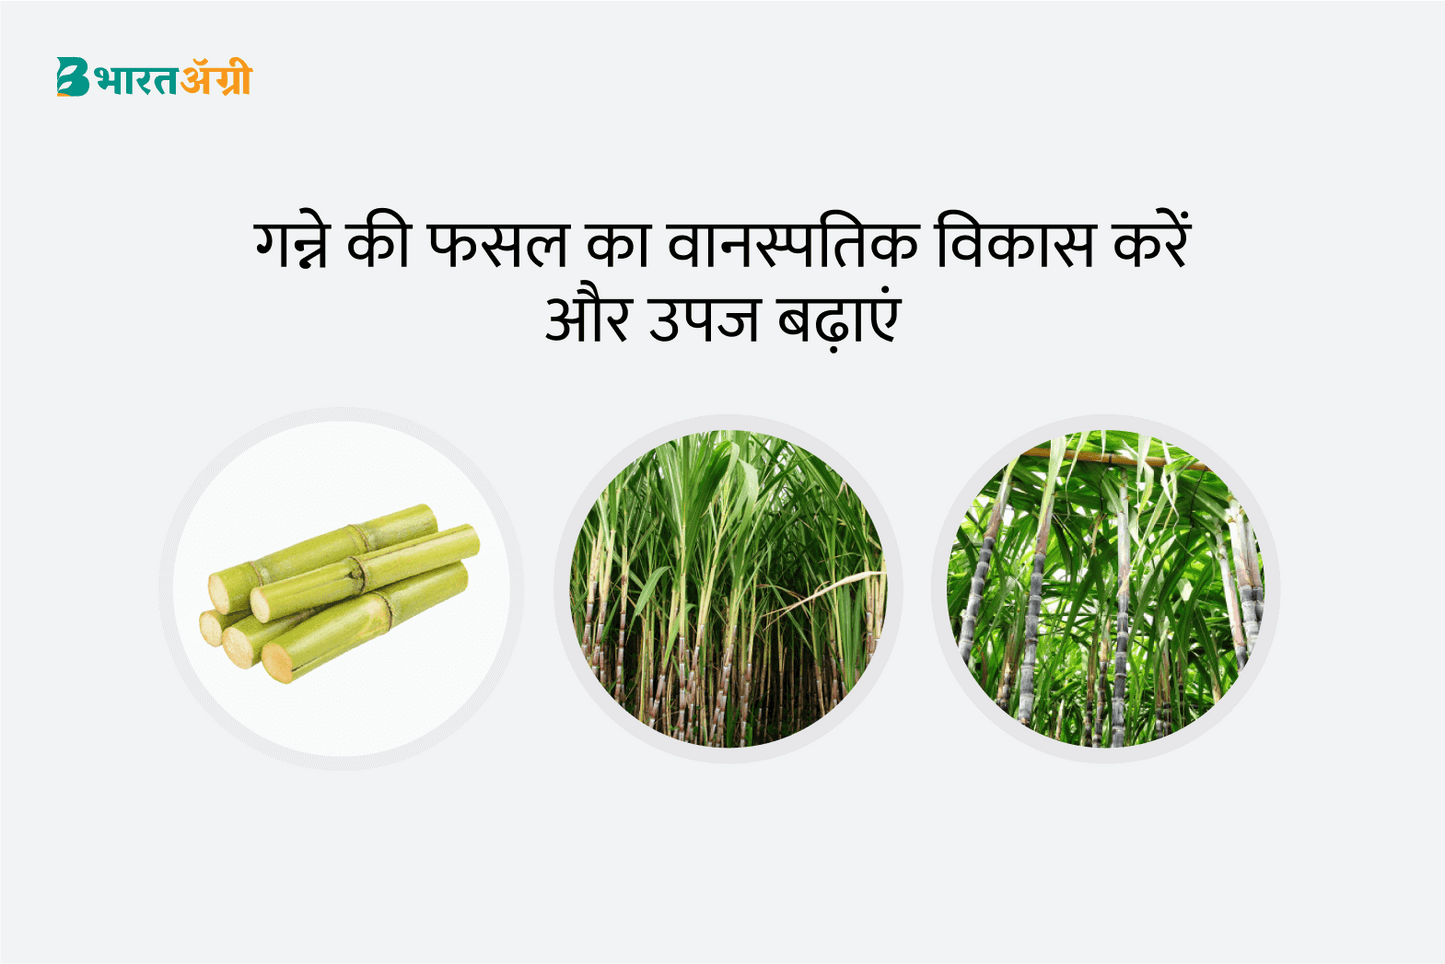 गन्ना बढ़त किट - वानस्पतिक वृद्धि (30-70 दिन) | Sugarcane Badhat Kit - Vegetative Growth (30-70 days) जिओलाइफ, आनंद एग्रो केयर | Geolife, Anand Agro Care